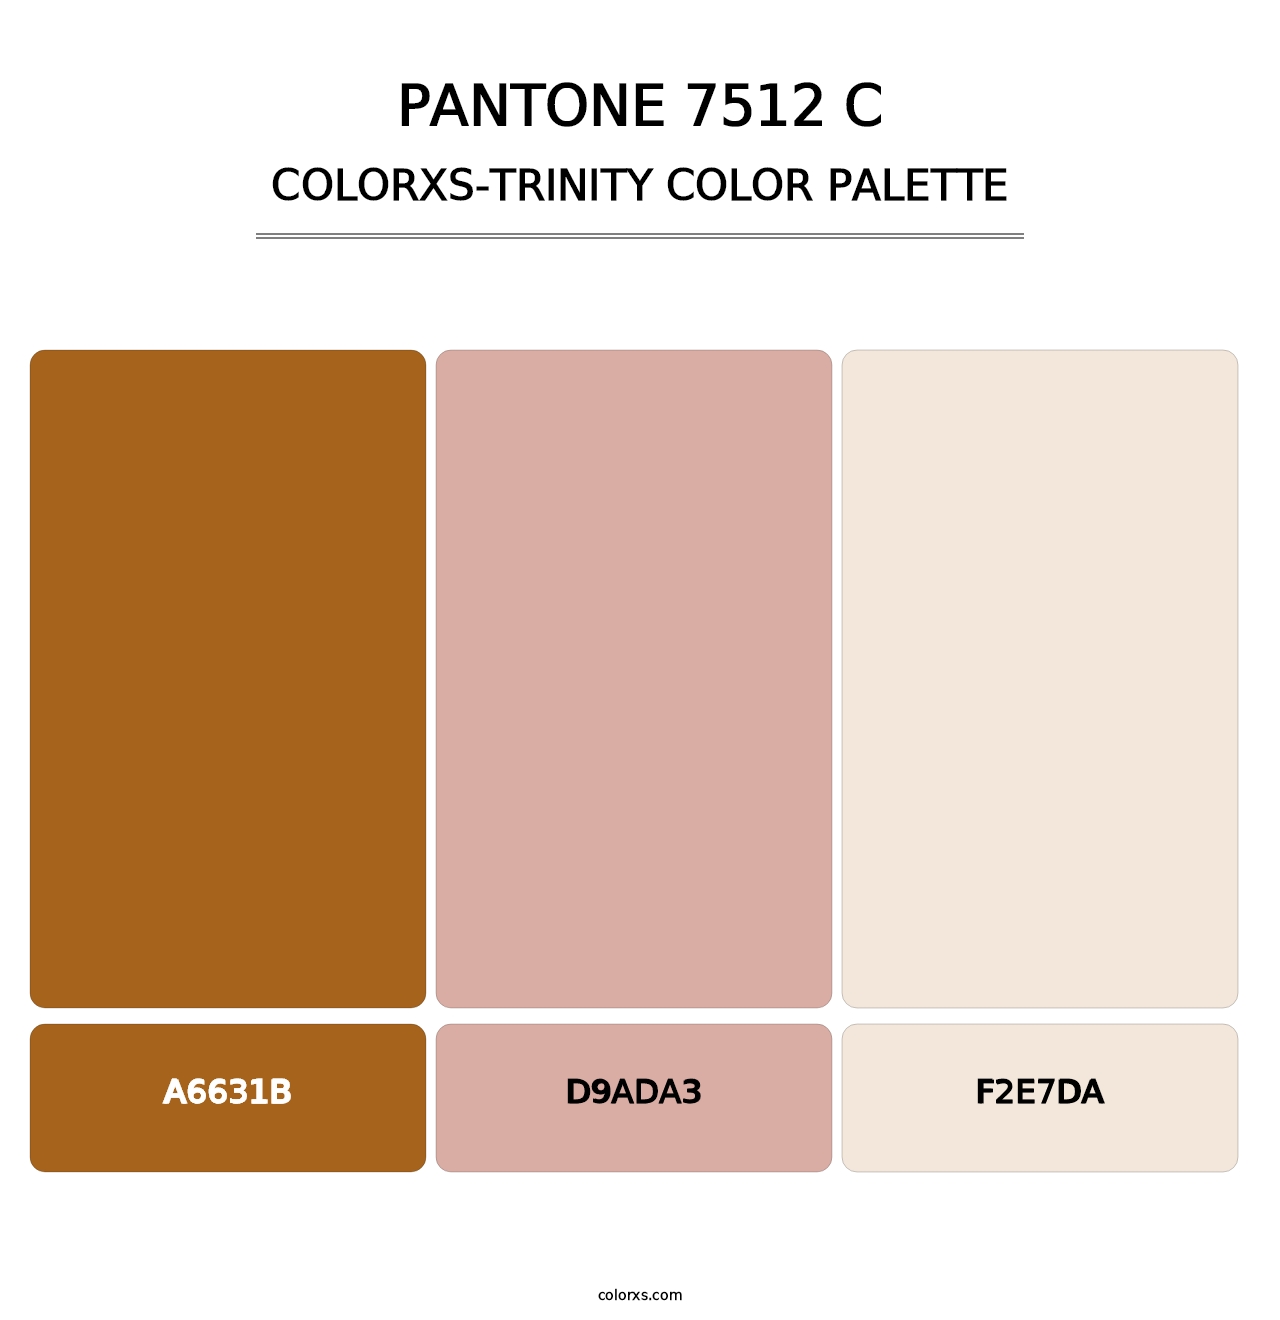 PANTONE 7512 C - Colorxs Trinity Palette